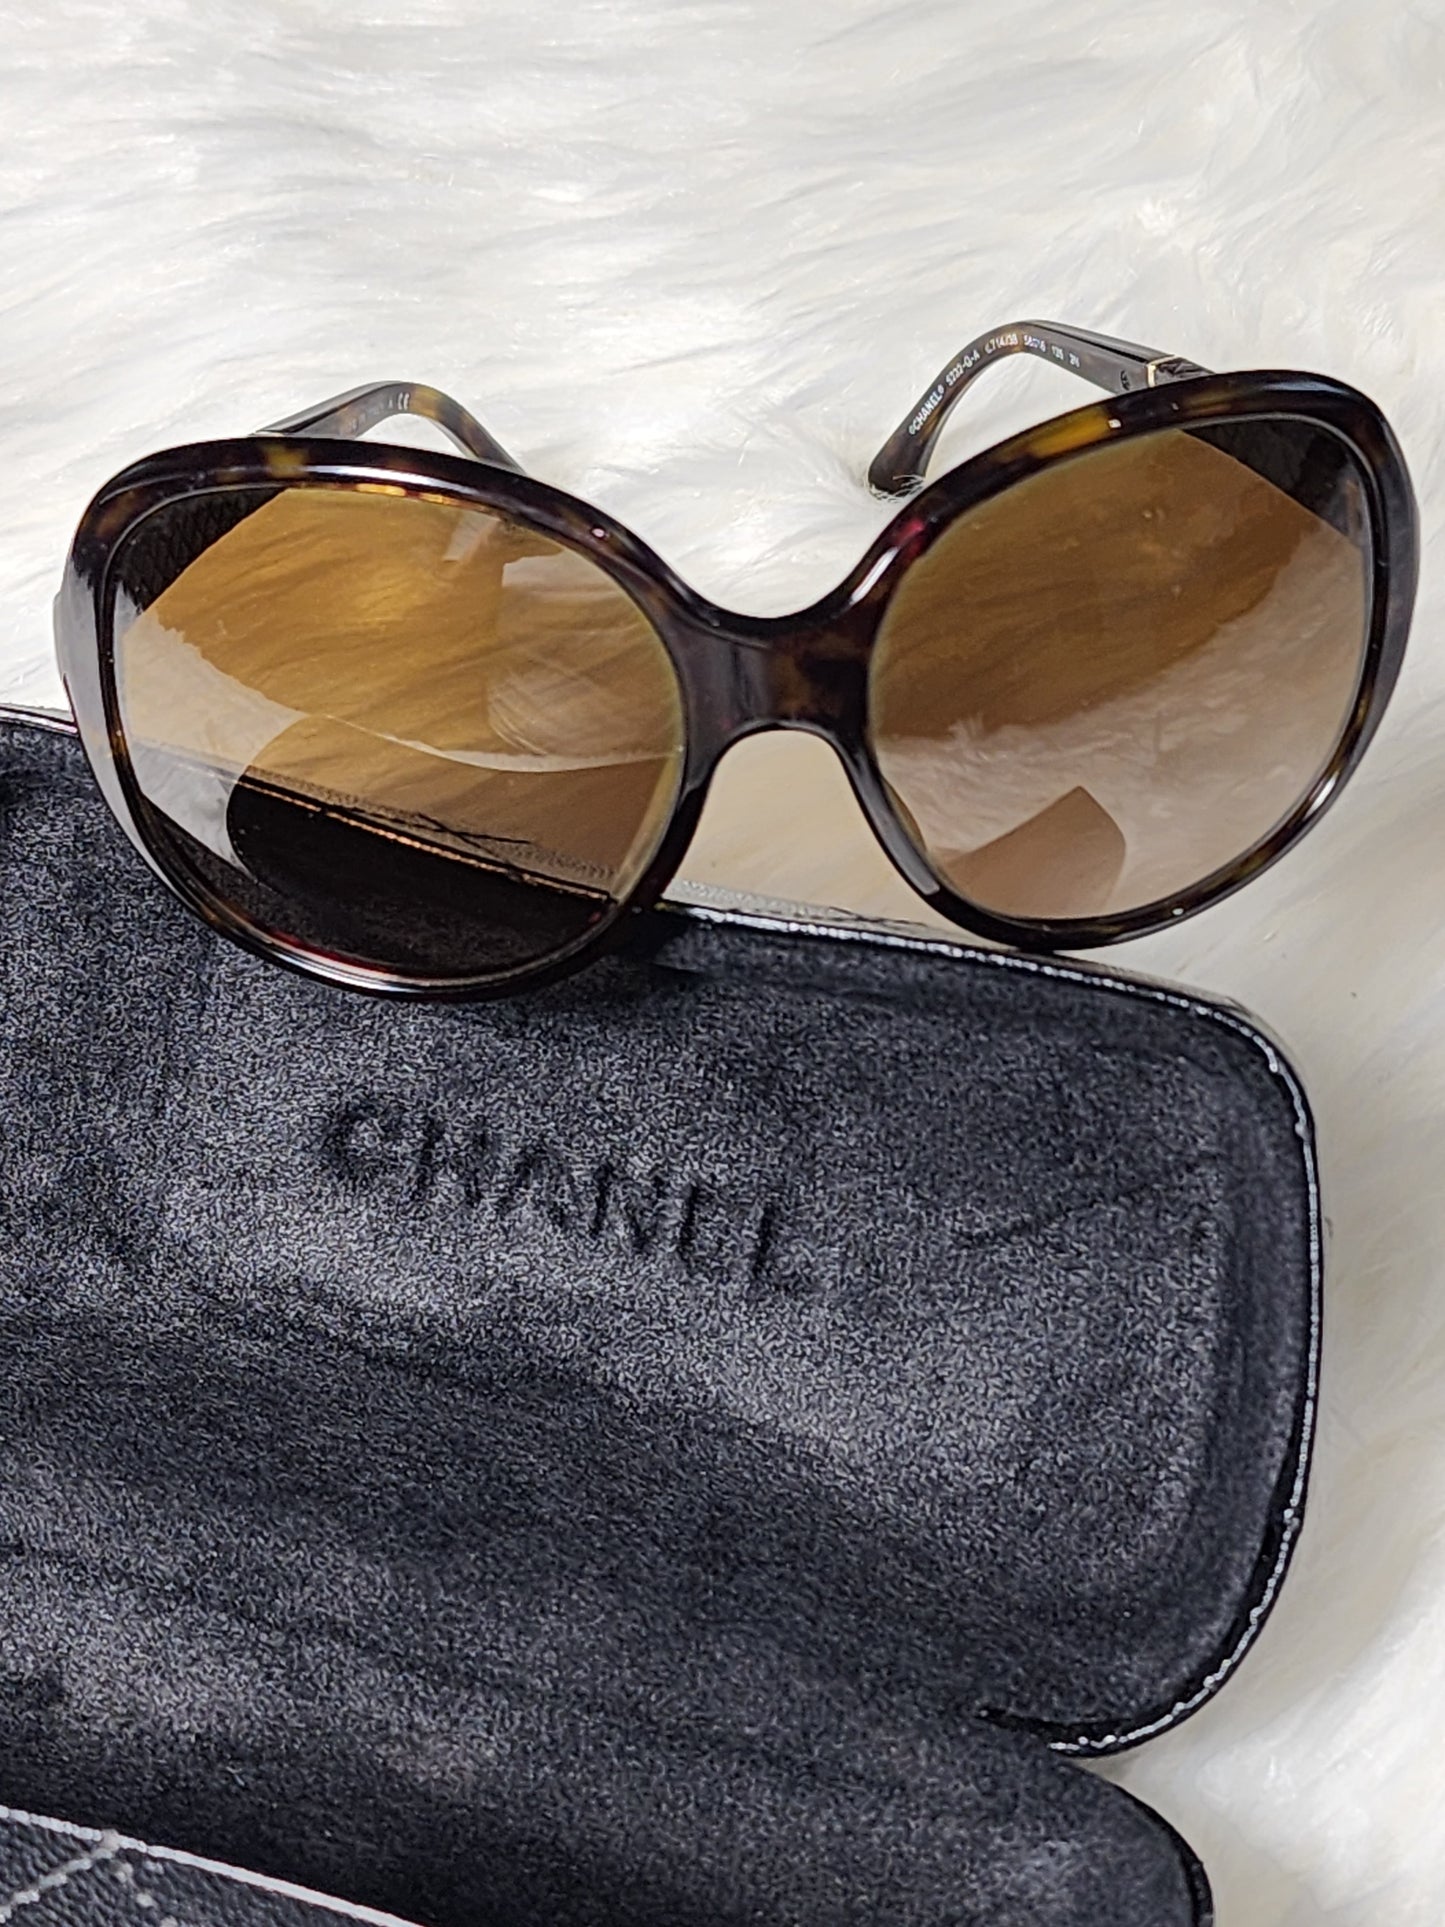 CHANEL Sunglasses